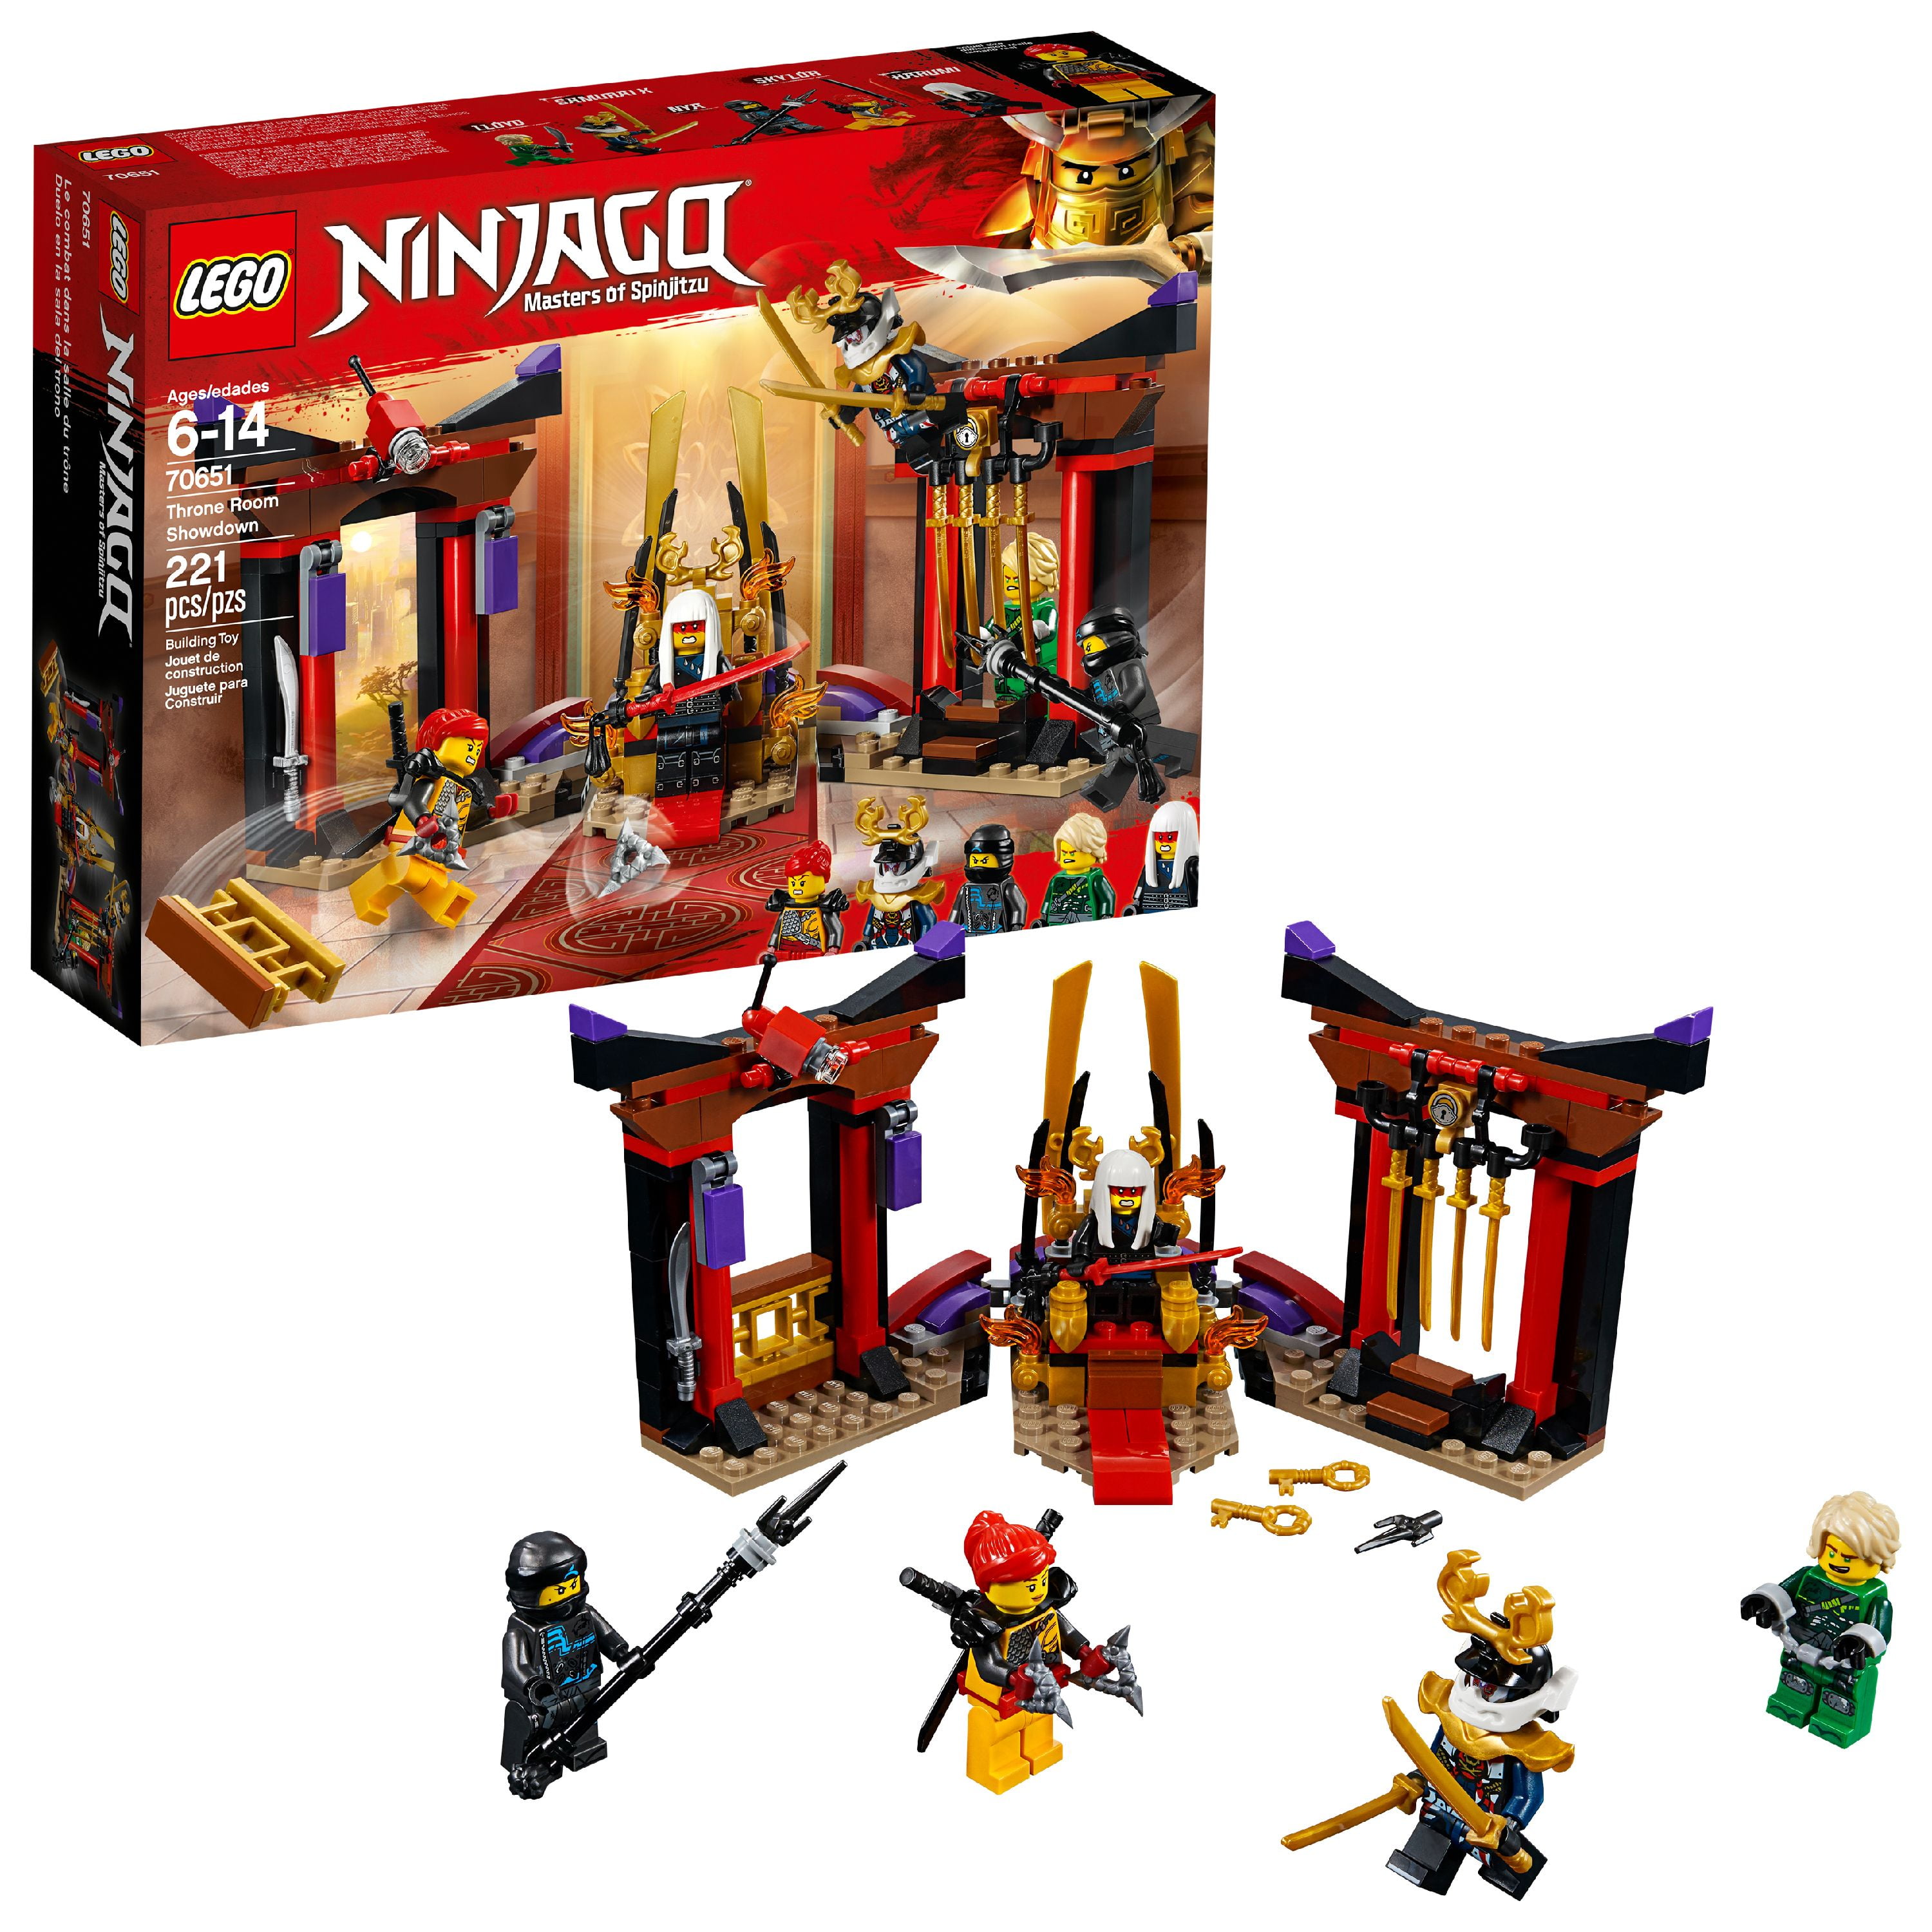 New Release For 2018! 70651 LEGO Ninjago Throne Room Showdown 221 Pieces Age 6 